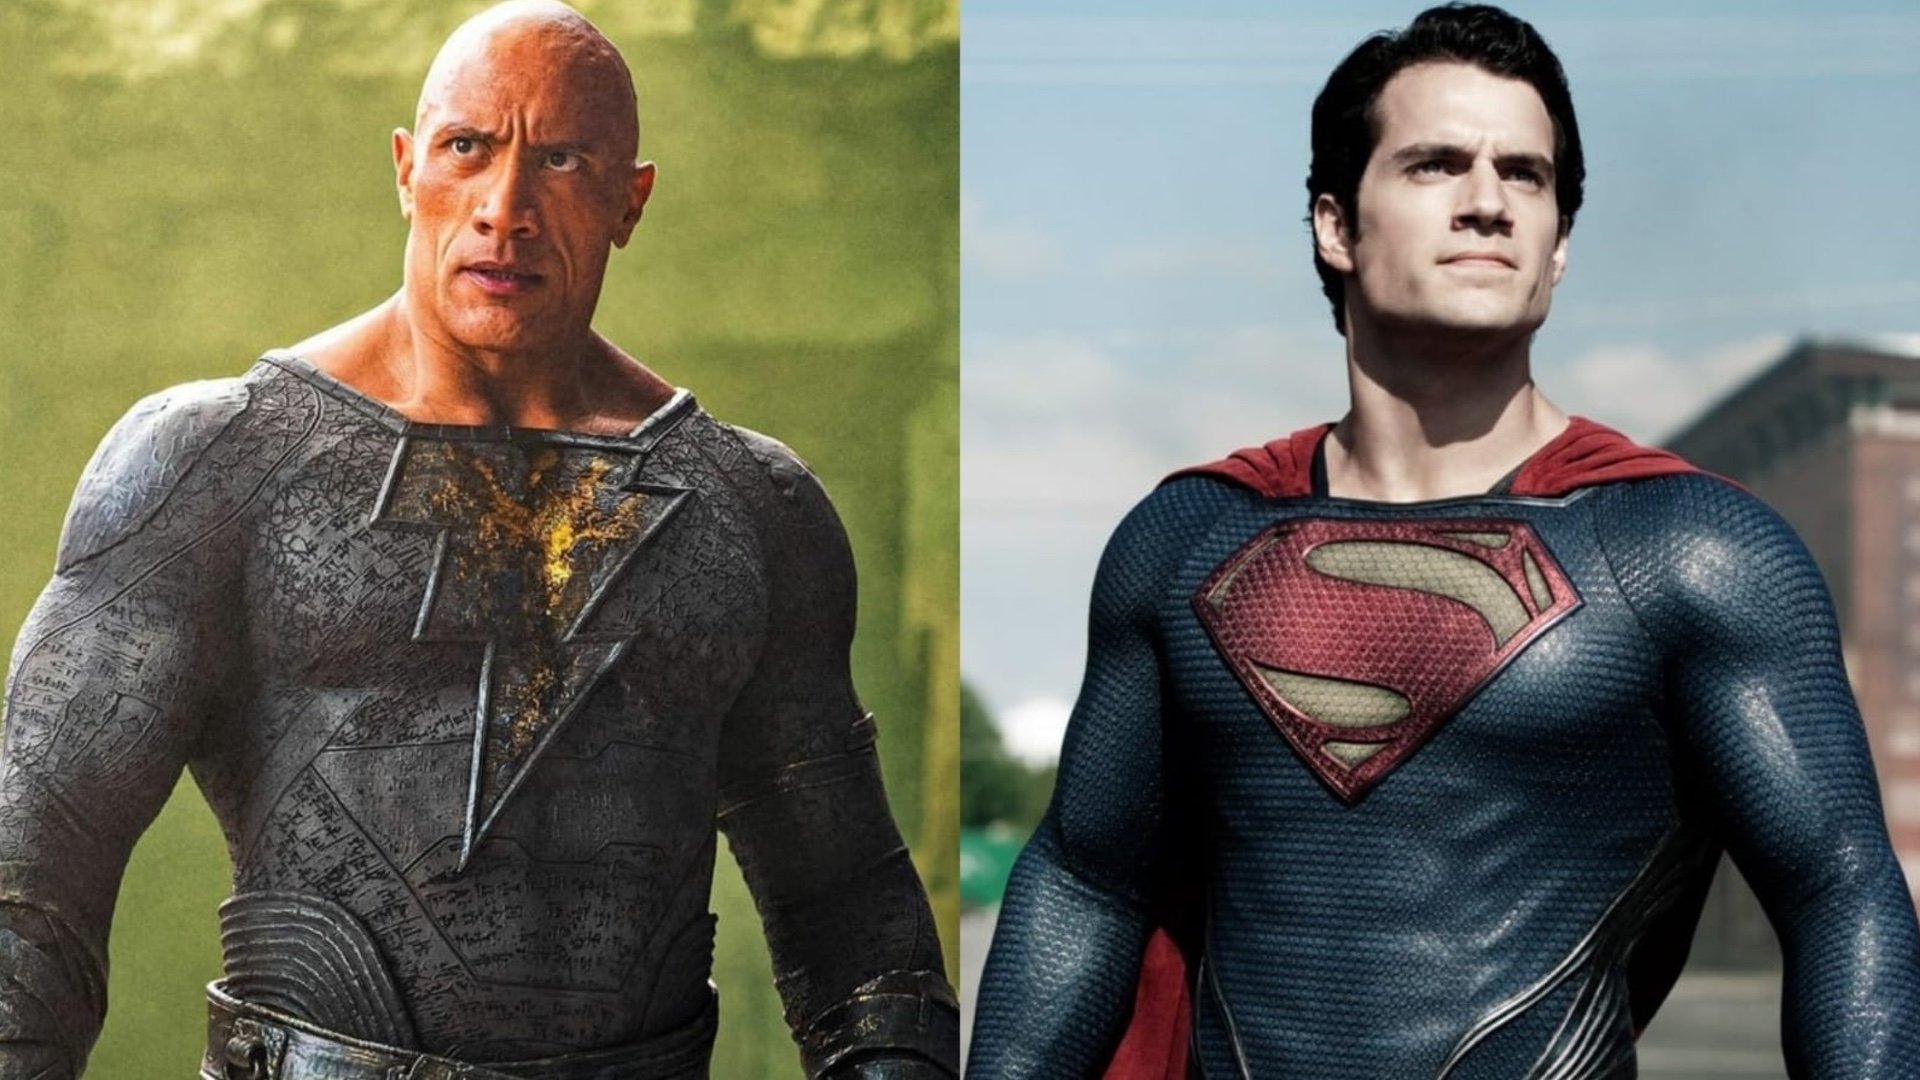 Dwayne Johnson 'Absolutely' Plans to Make Black Adam vs Superman Movie